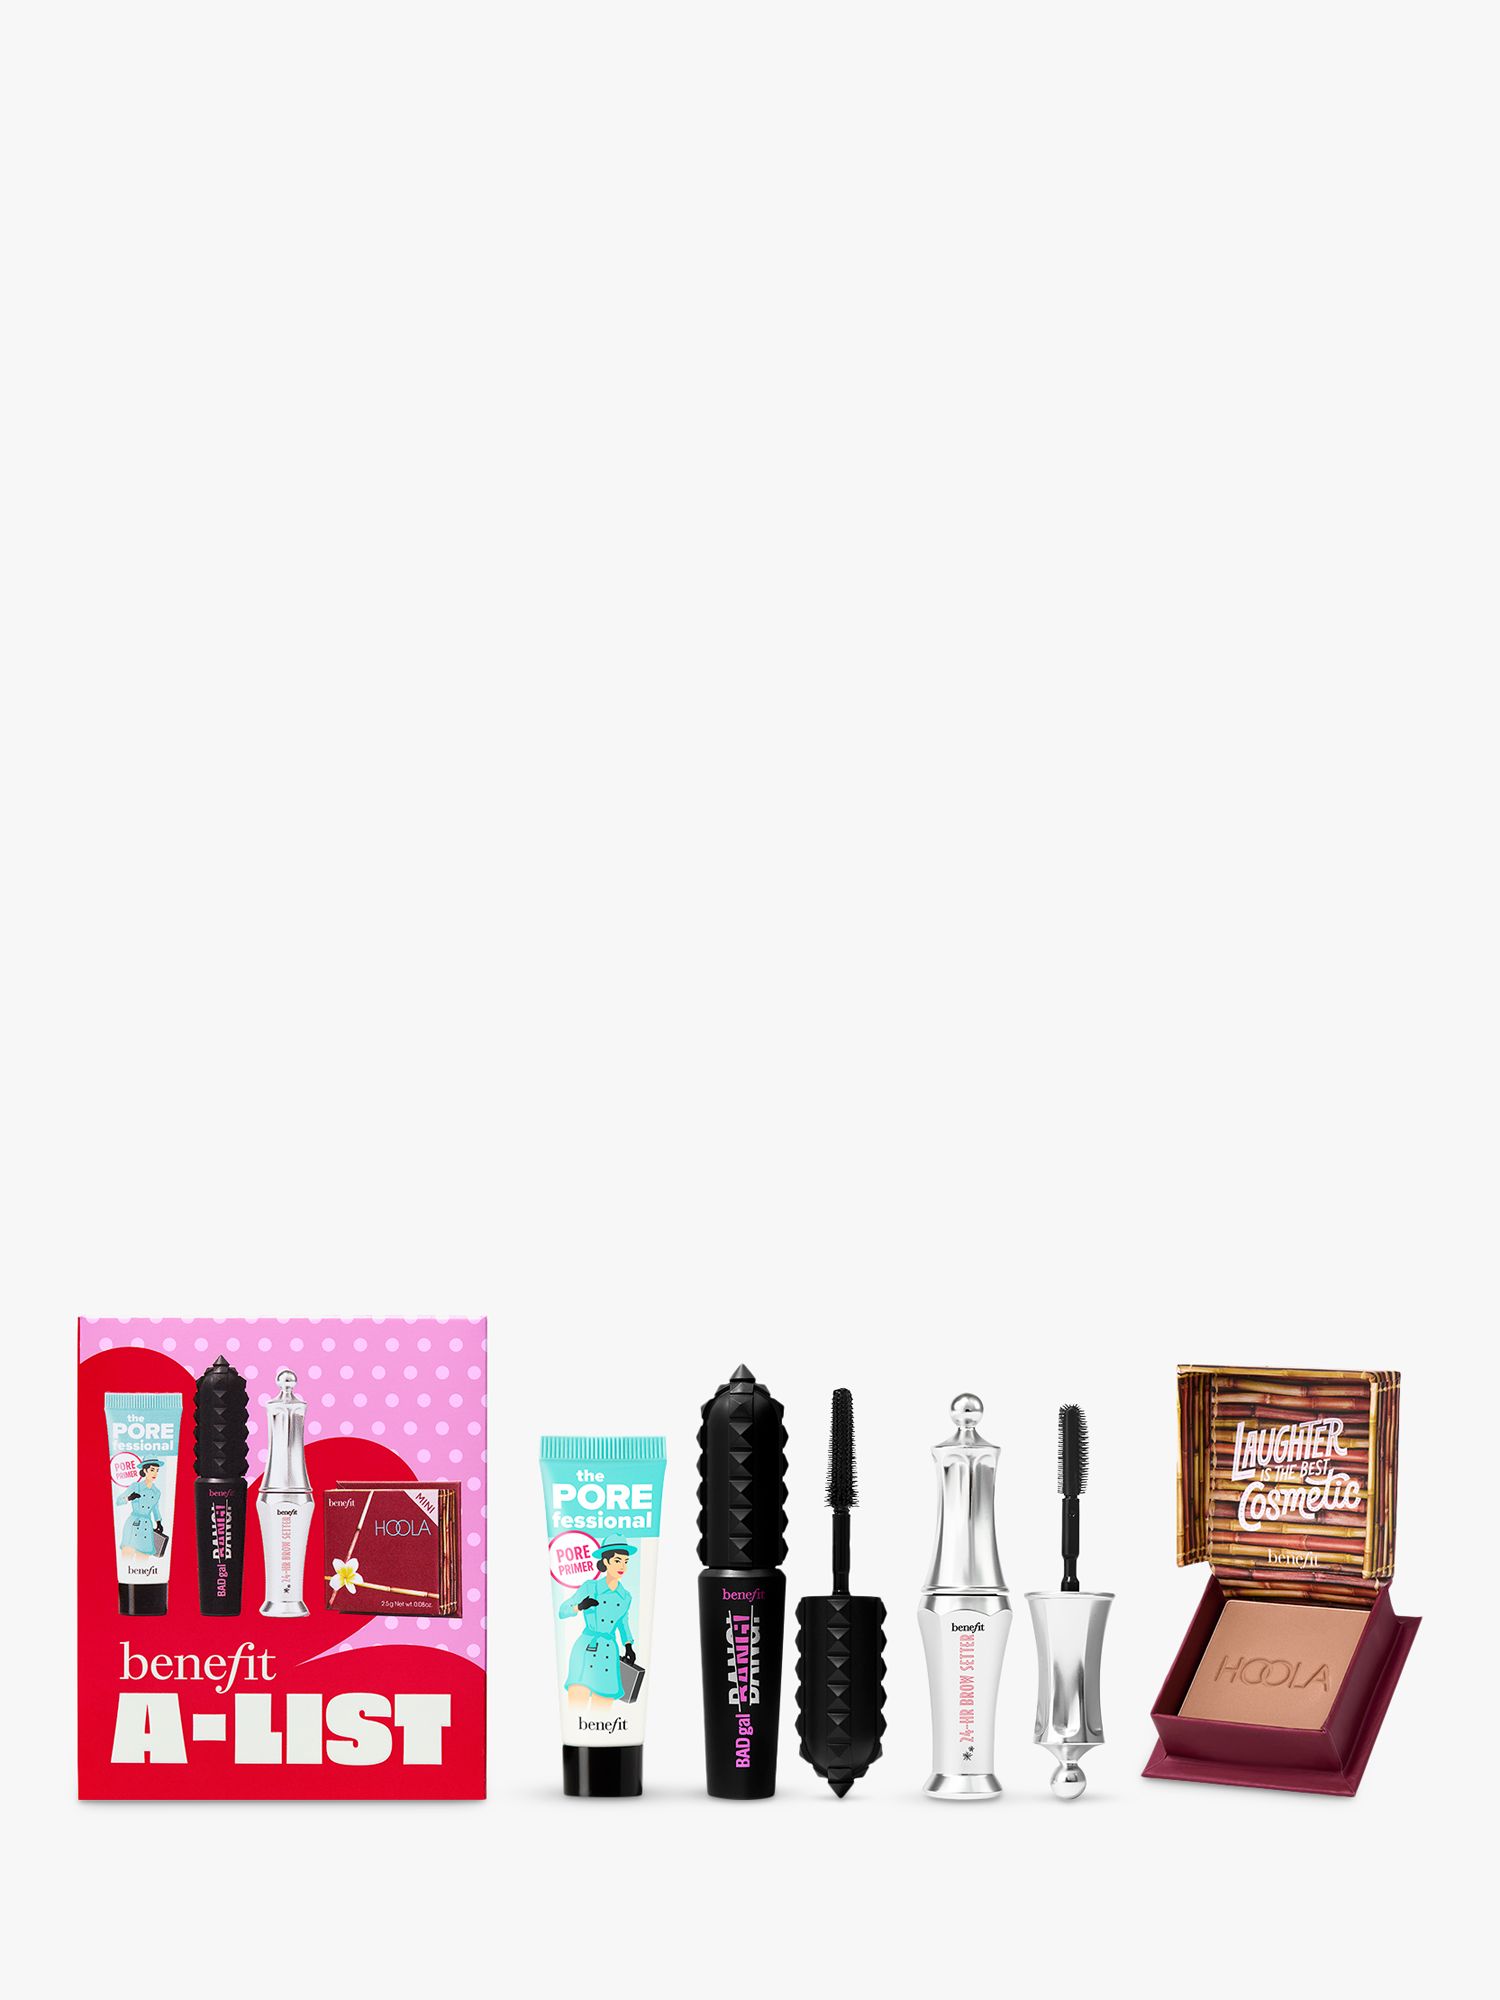 Benefit A-List Mini Makeup Gift Set 2